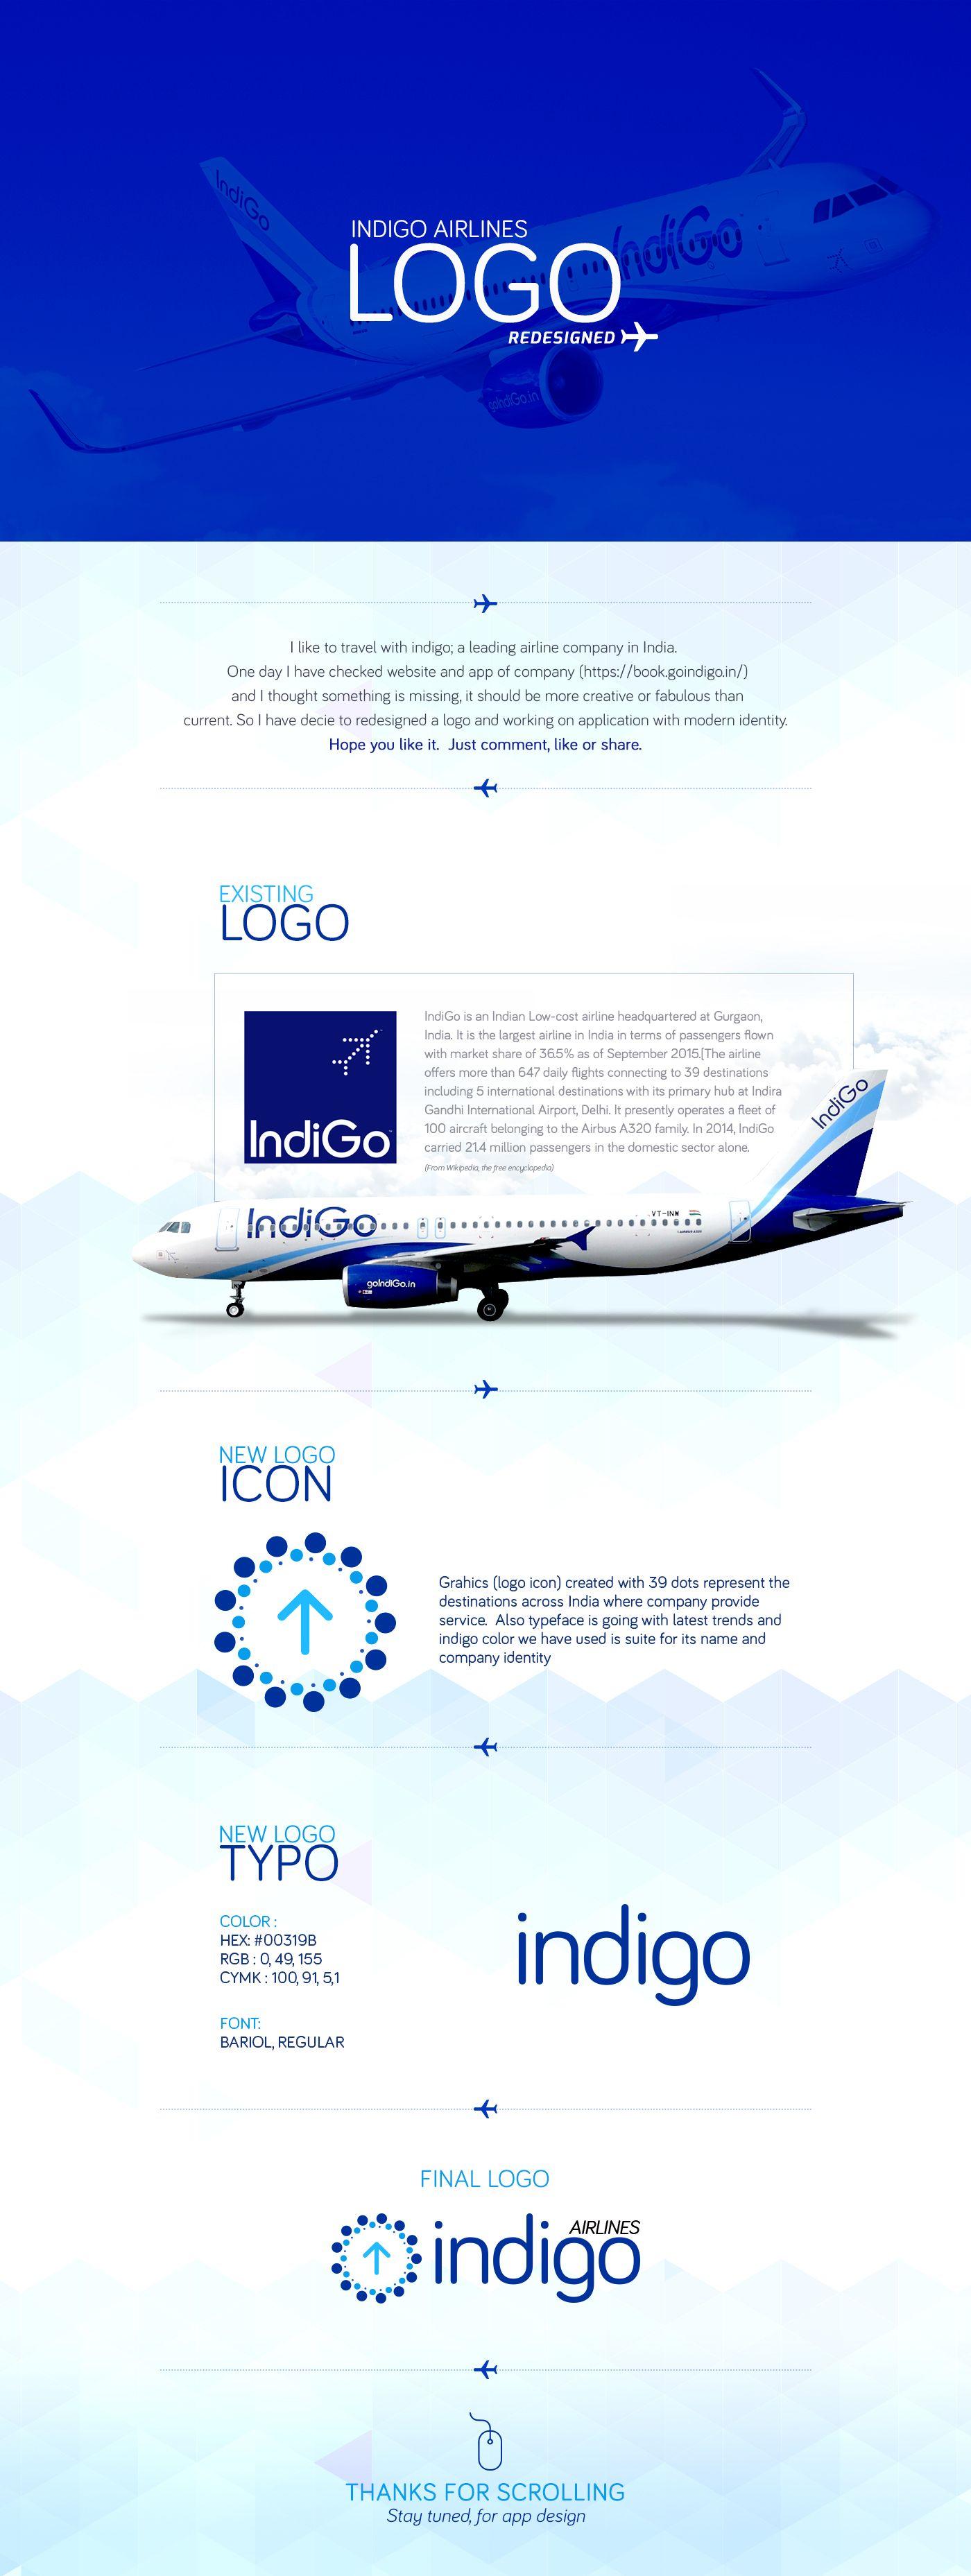 Leading Airline Logo - Indigo Airlines LOGO Redesigned on Behance